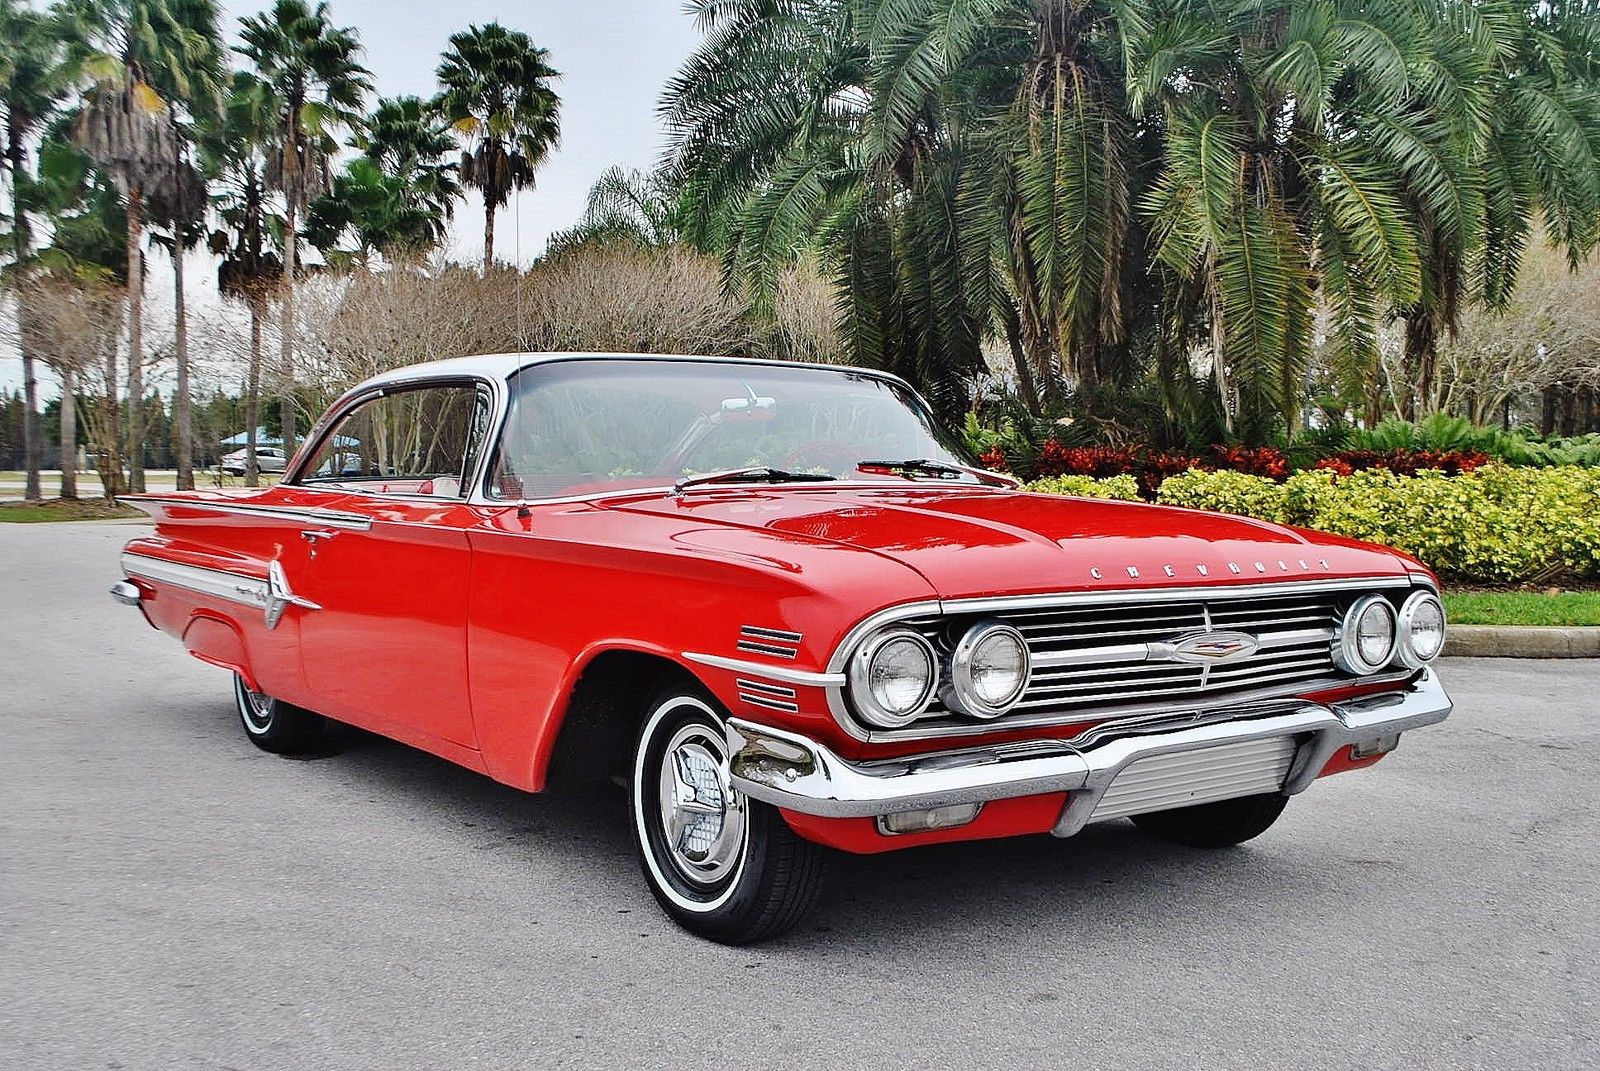 1960 Chevrolet Impala spectacular